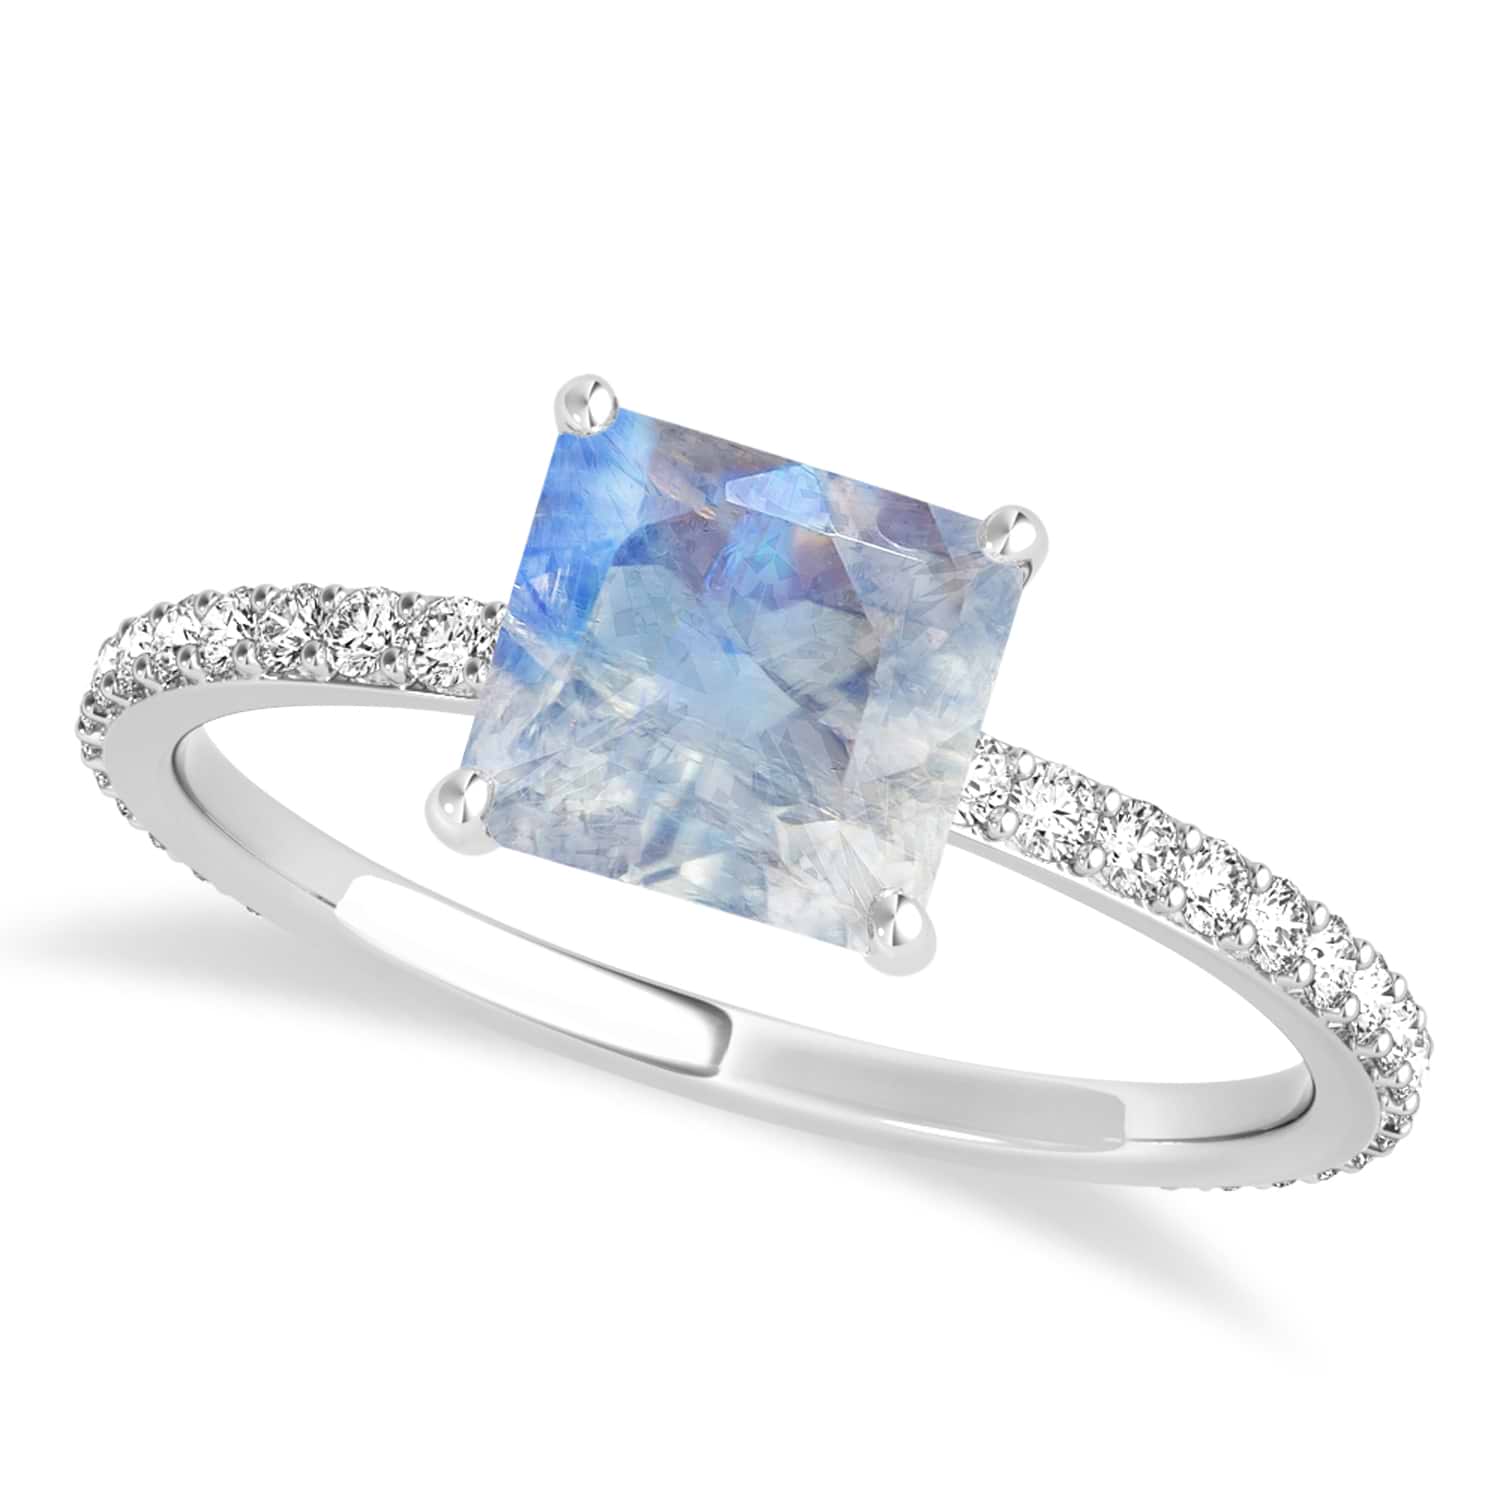 Princess Moonstone & Diamond Hidden Halo Engagement Ring 14k White Gold (0.89ct)